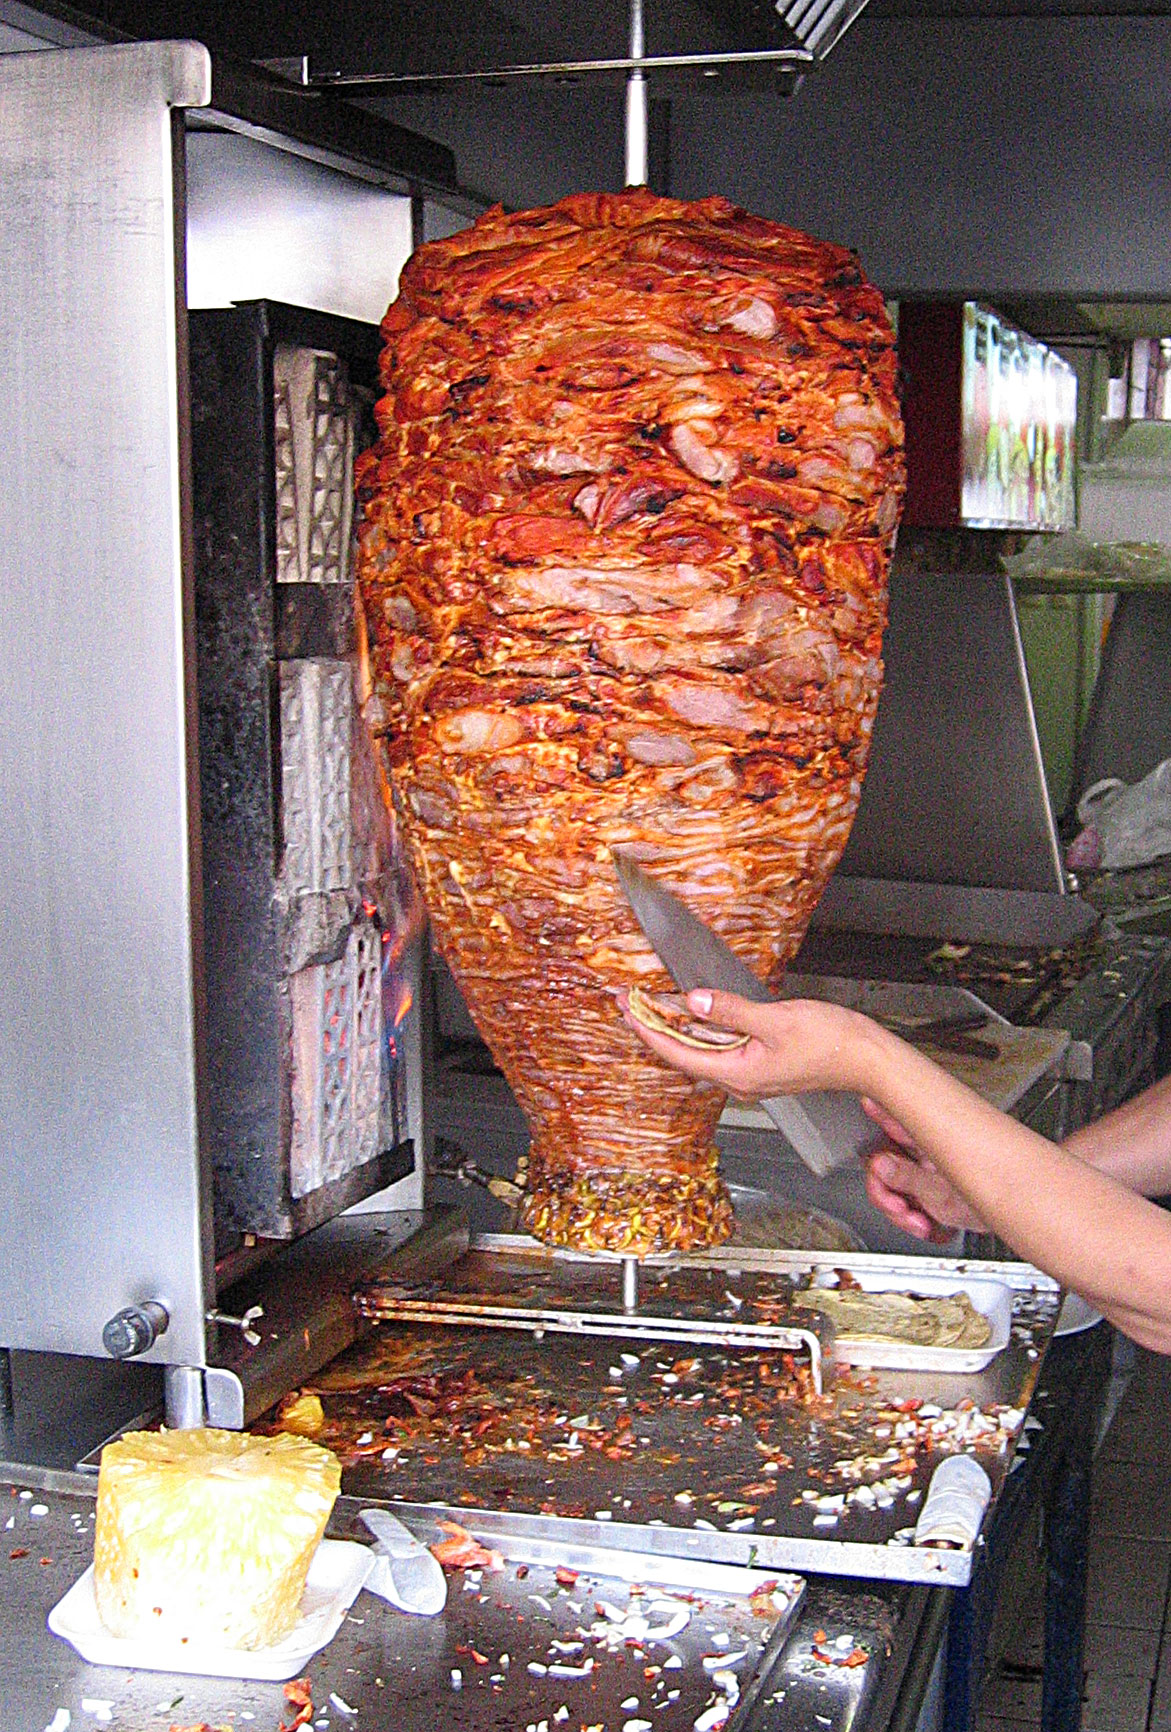 File:Tacos-al-Pastor.jpg - Wikipedia, the free encyclopedia